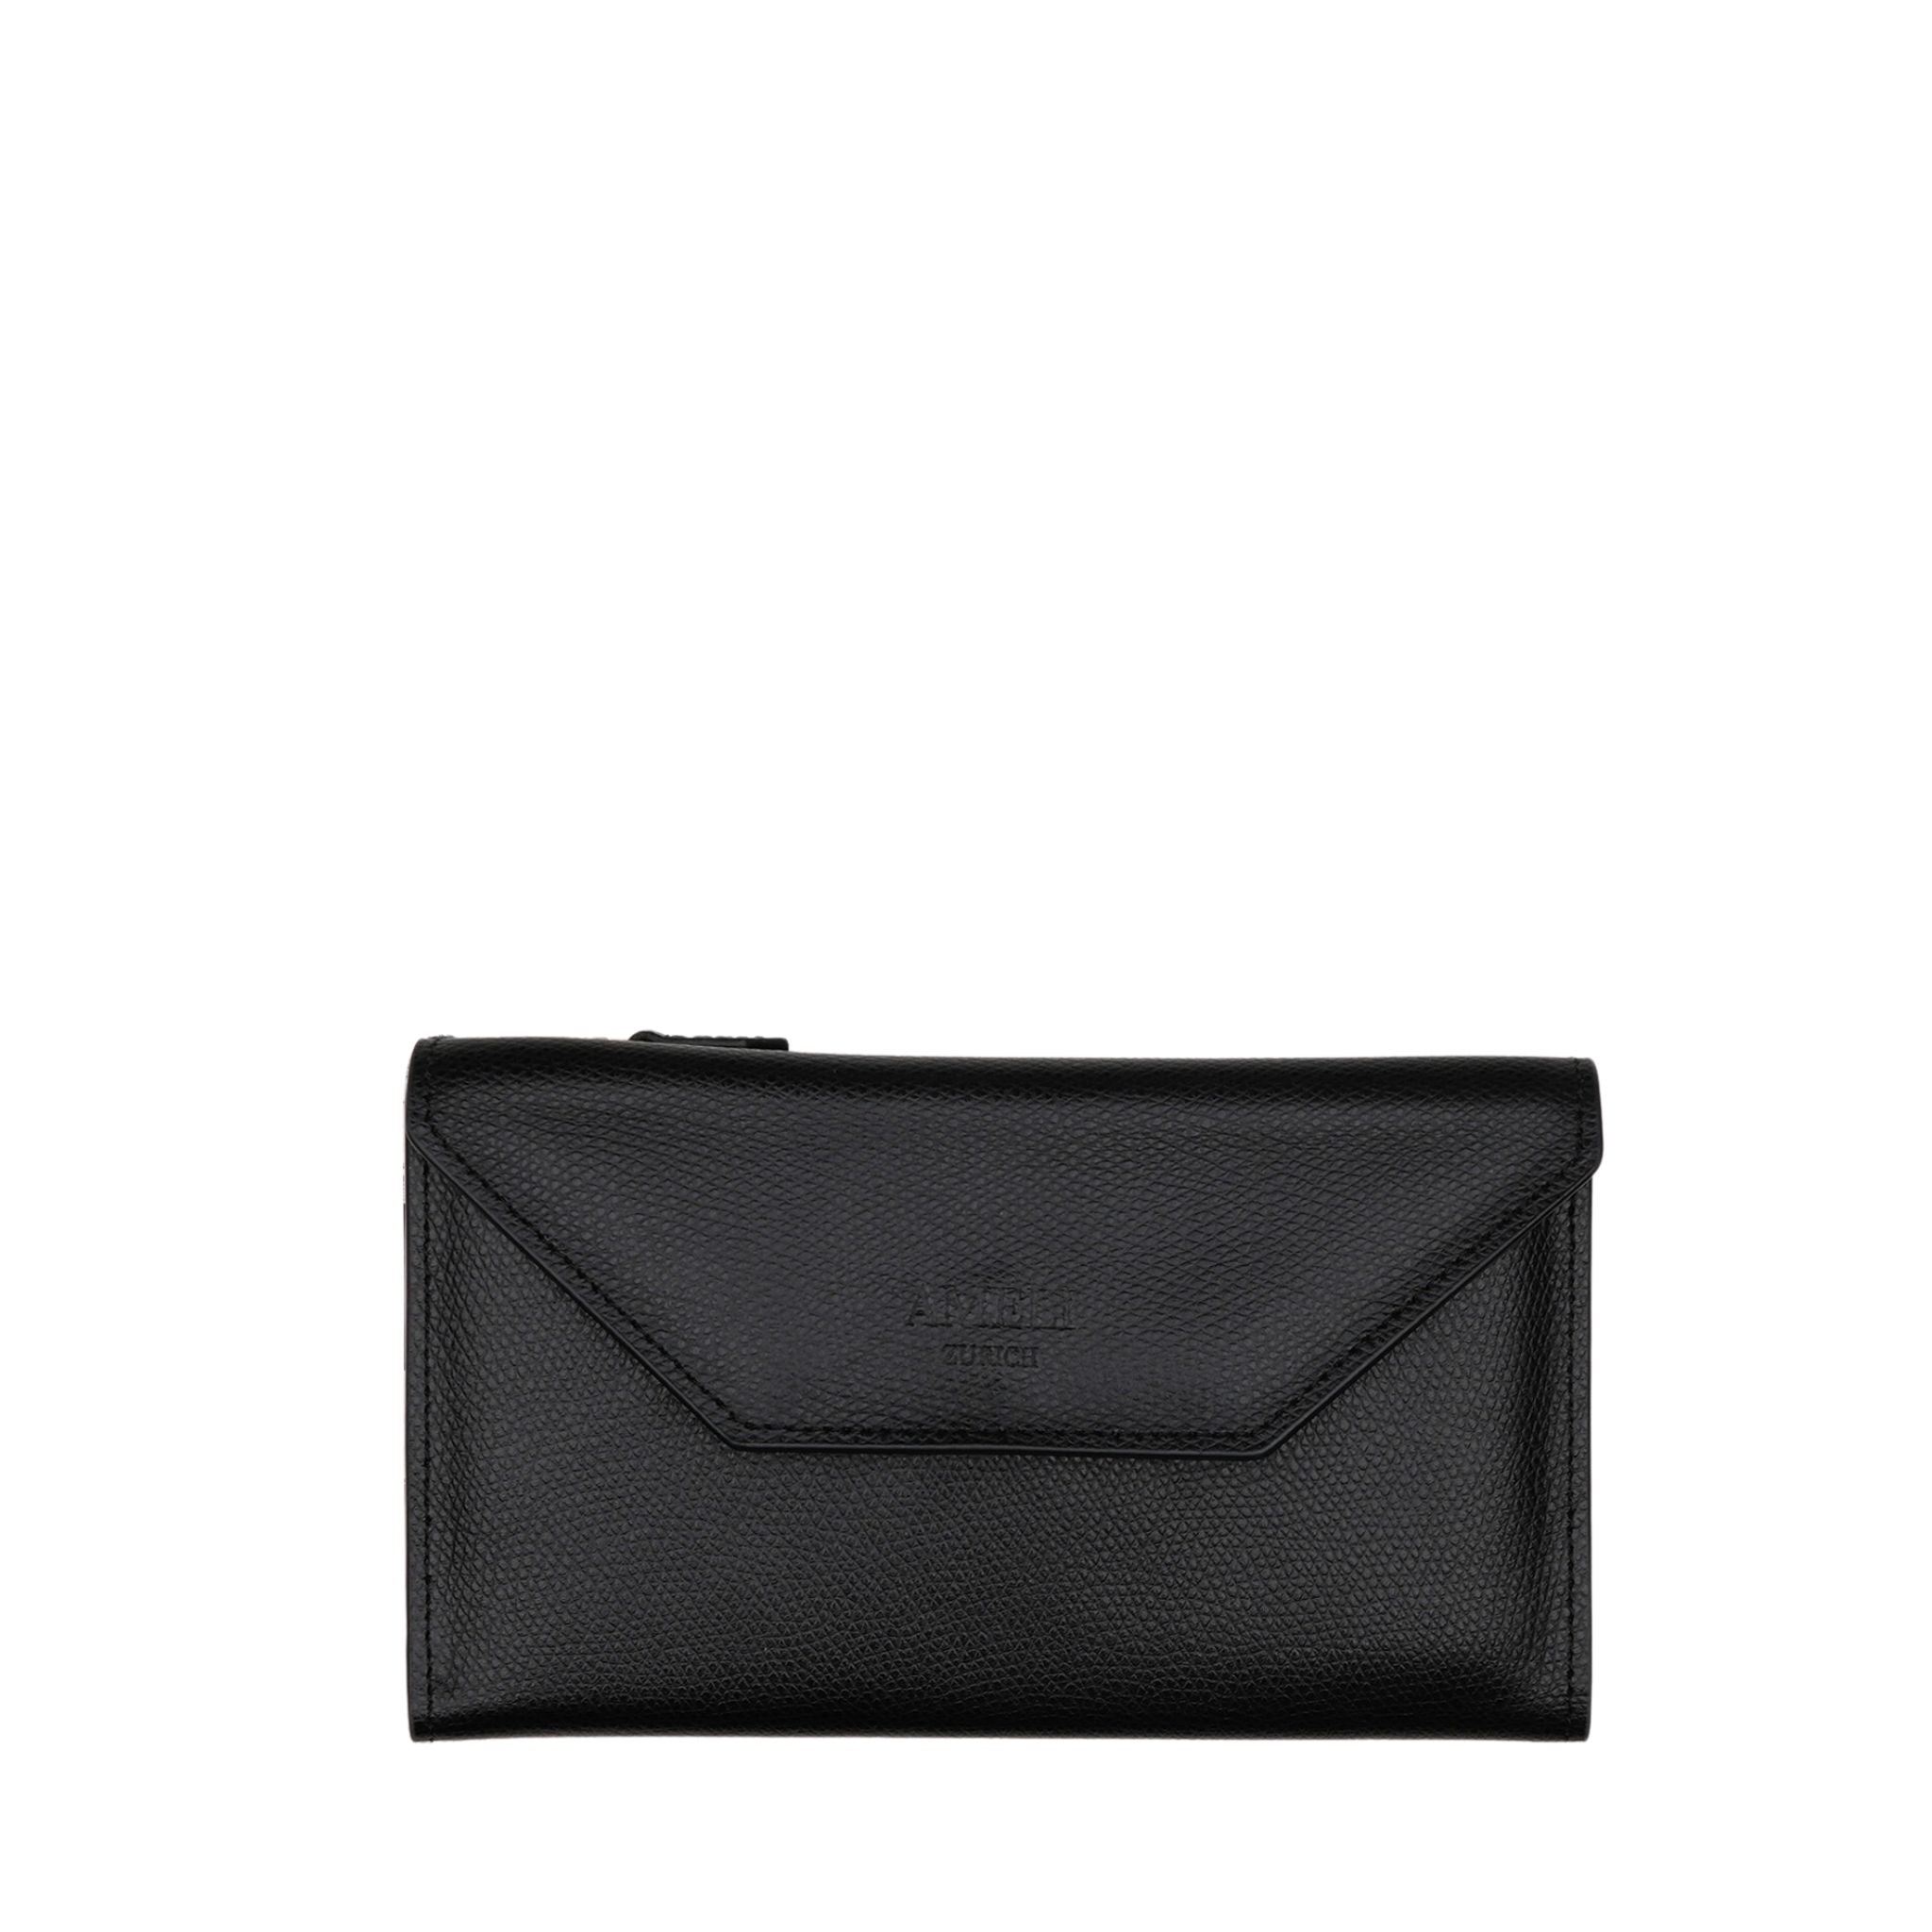 AMELI Zurich | Wallet | Black | Pebbled Leather | Front